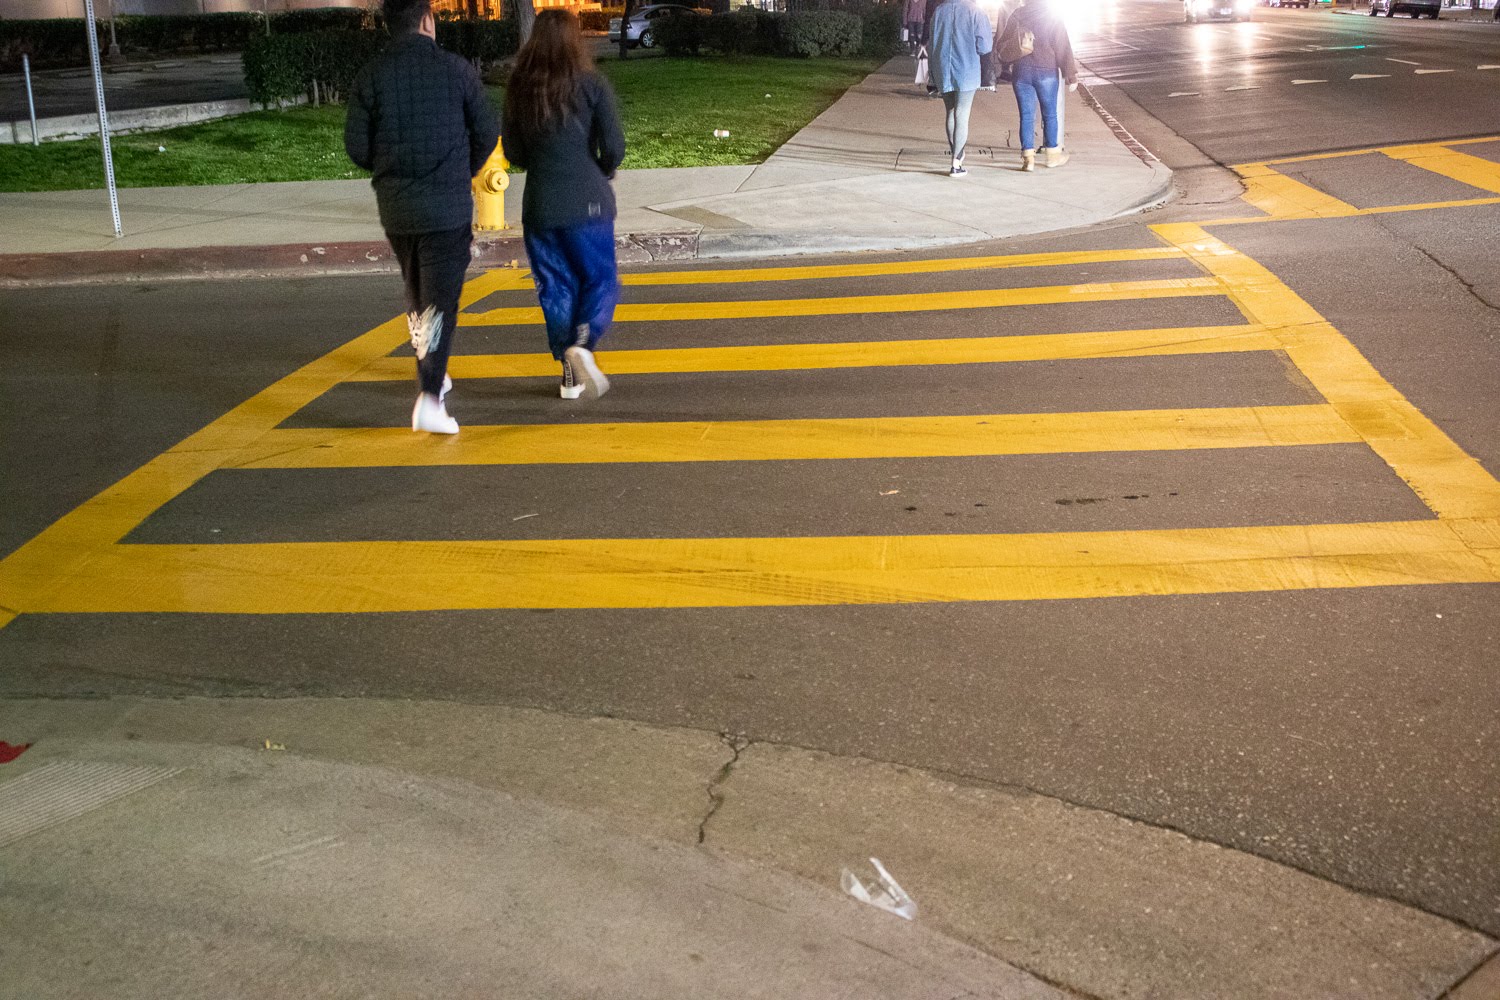 Bakersfield, CA - Pedestrian Struck in Hit-&-Run Crash on Pioneer Dr